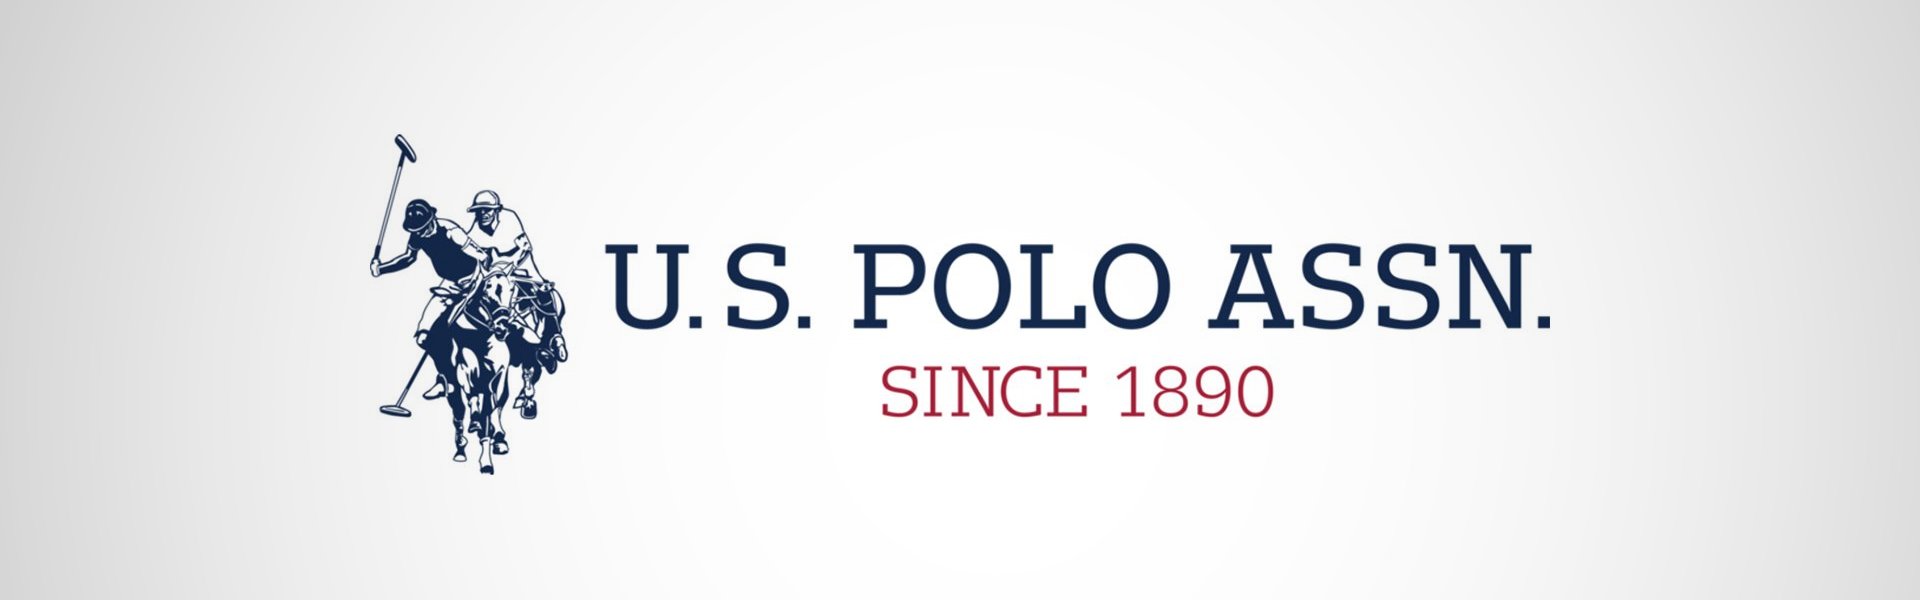 U.S. Polo miesten kengät Tabry, tummansininen U. S. Polo Assn.